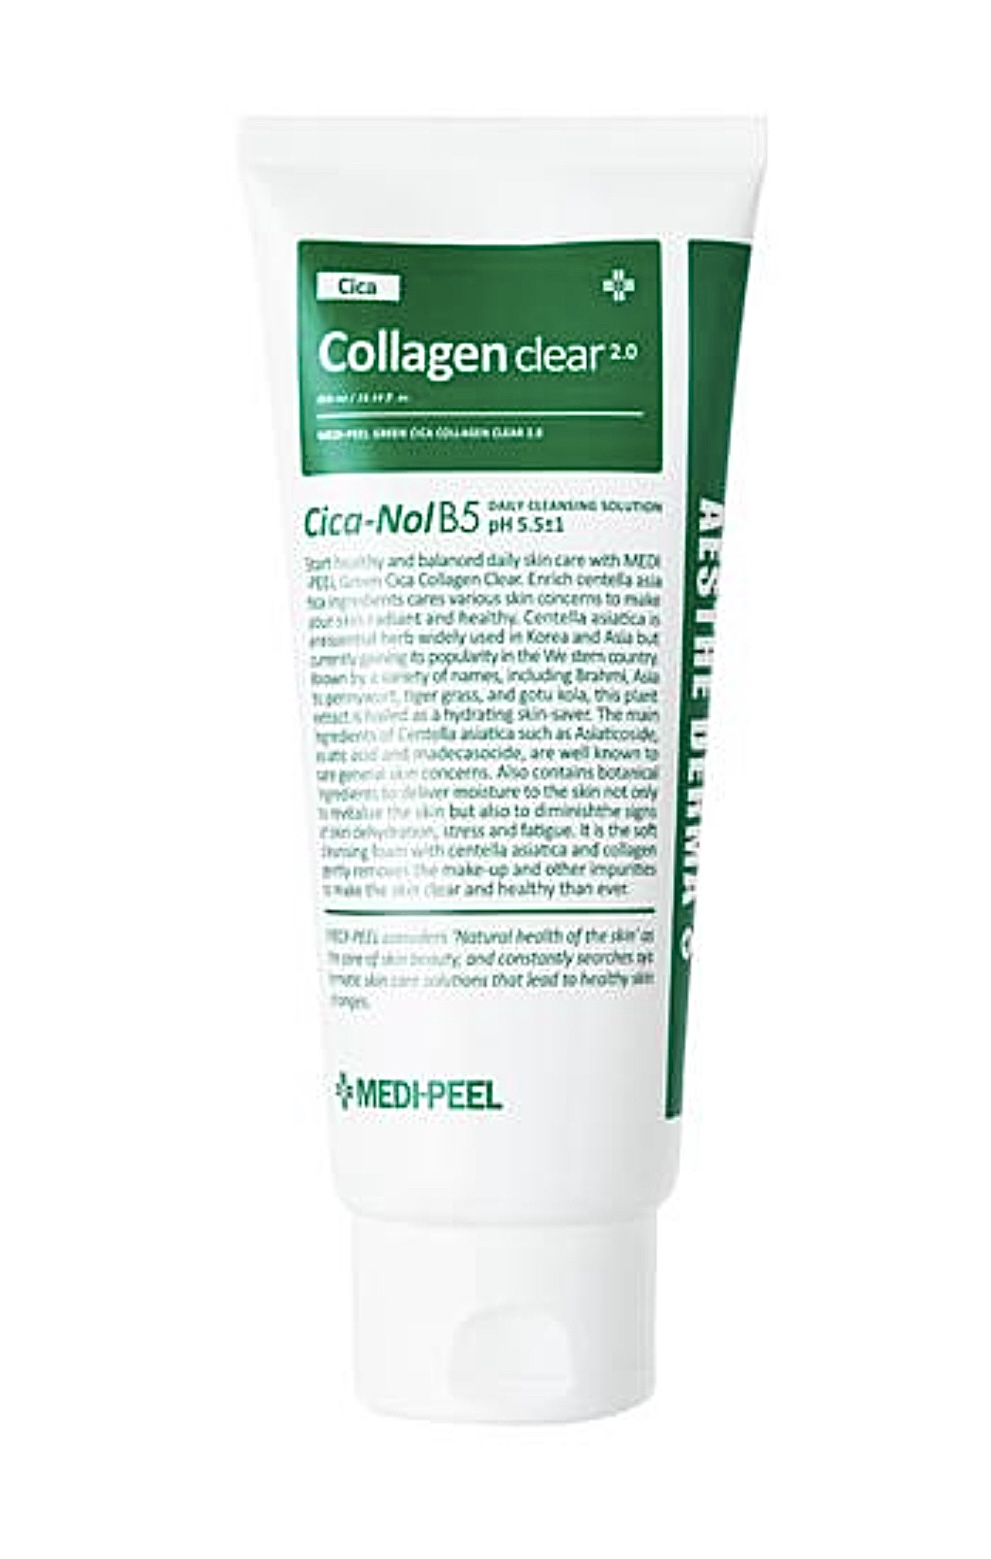 MEDI-PEEL Green Cica Collagen Clear 2.0 (300ml) | Ecoplace